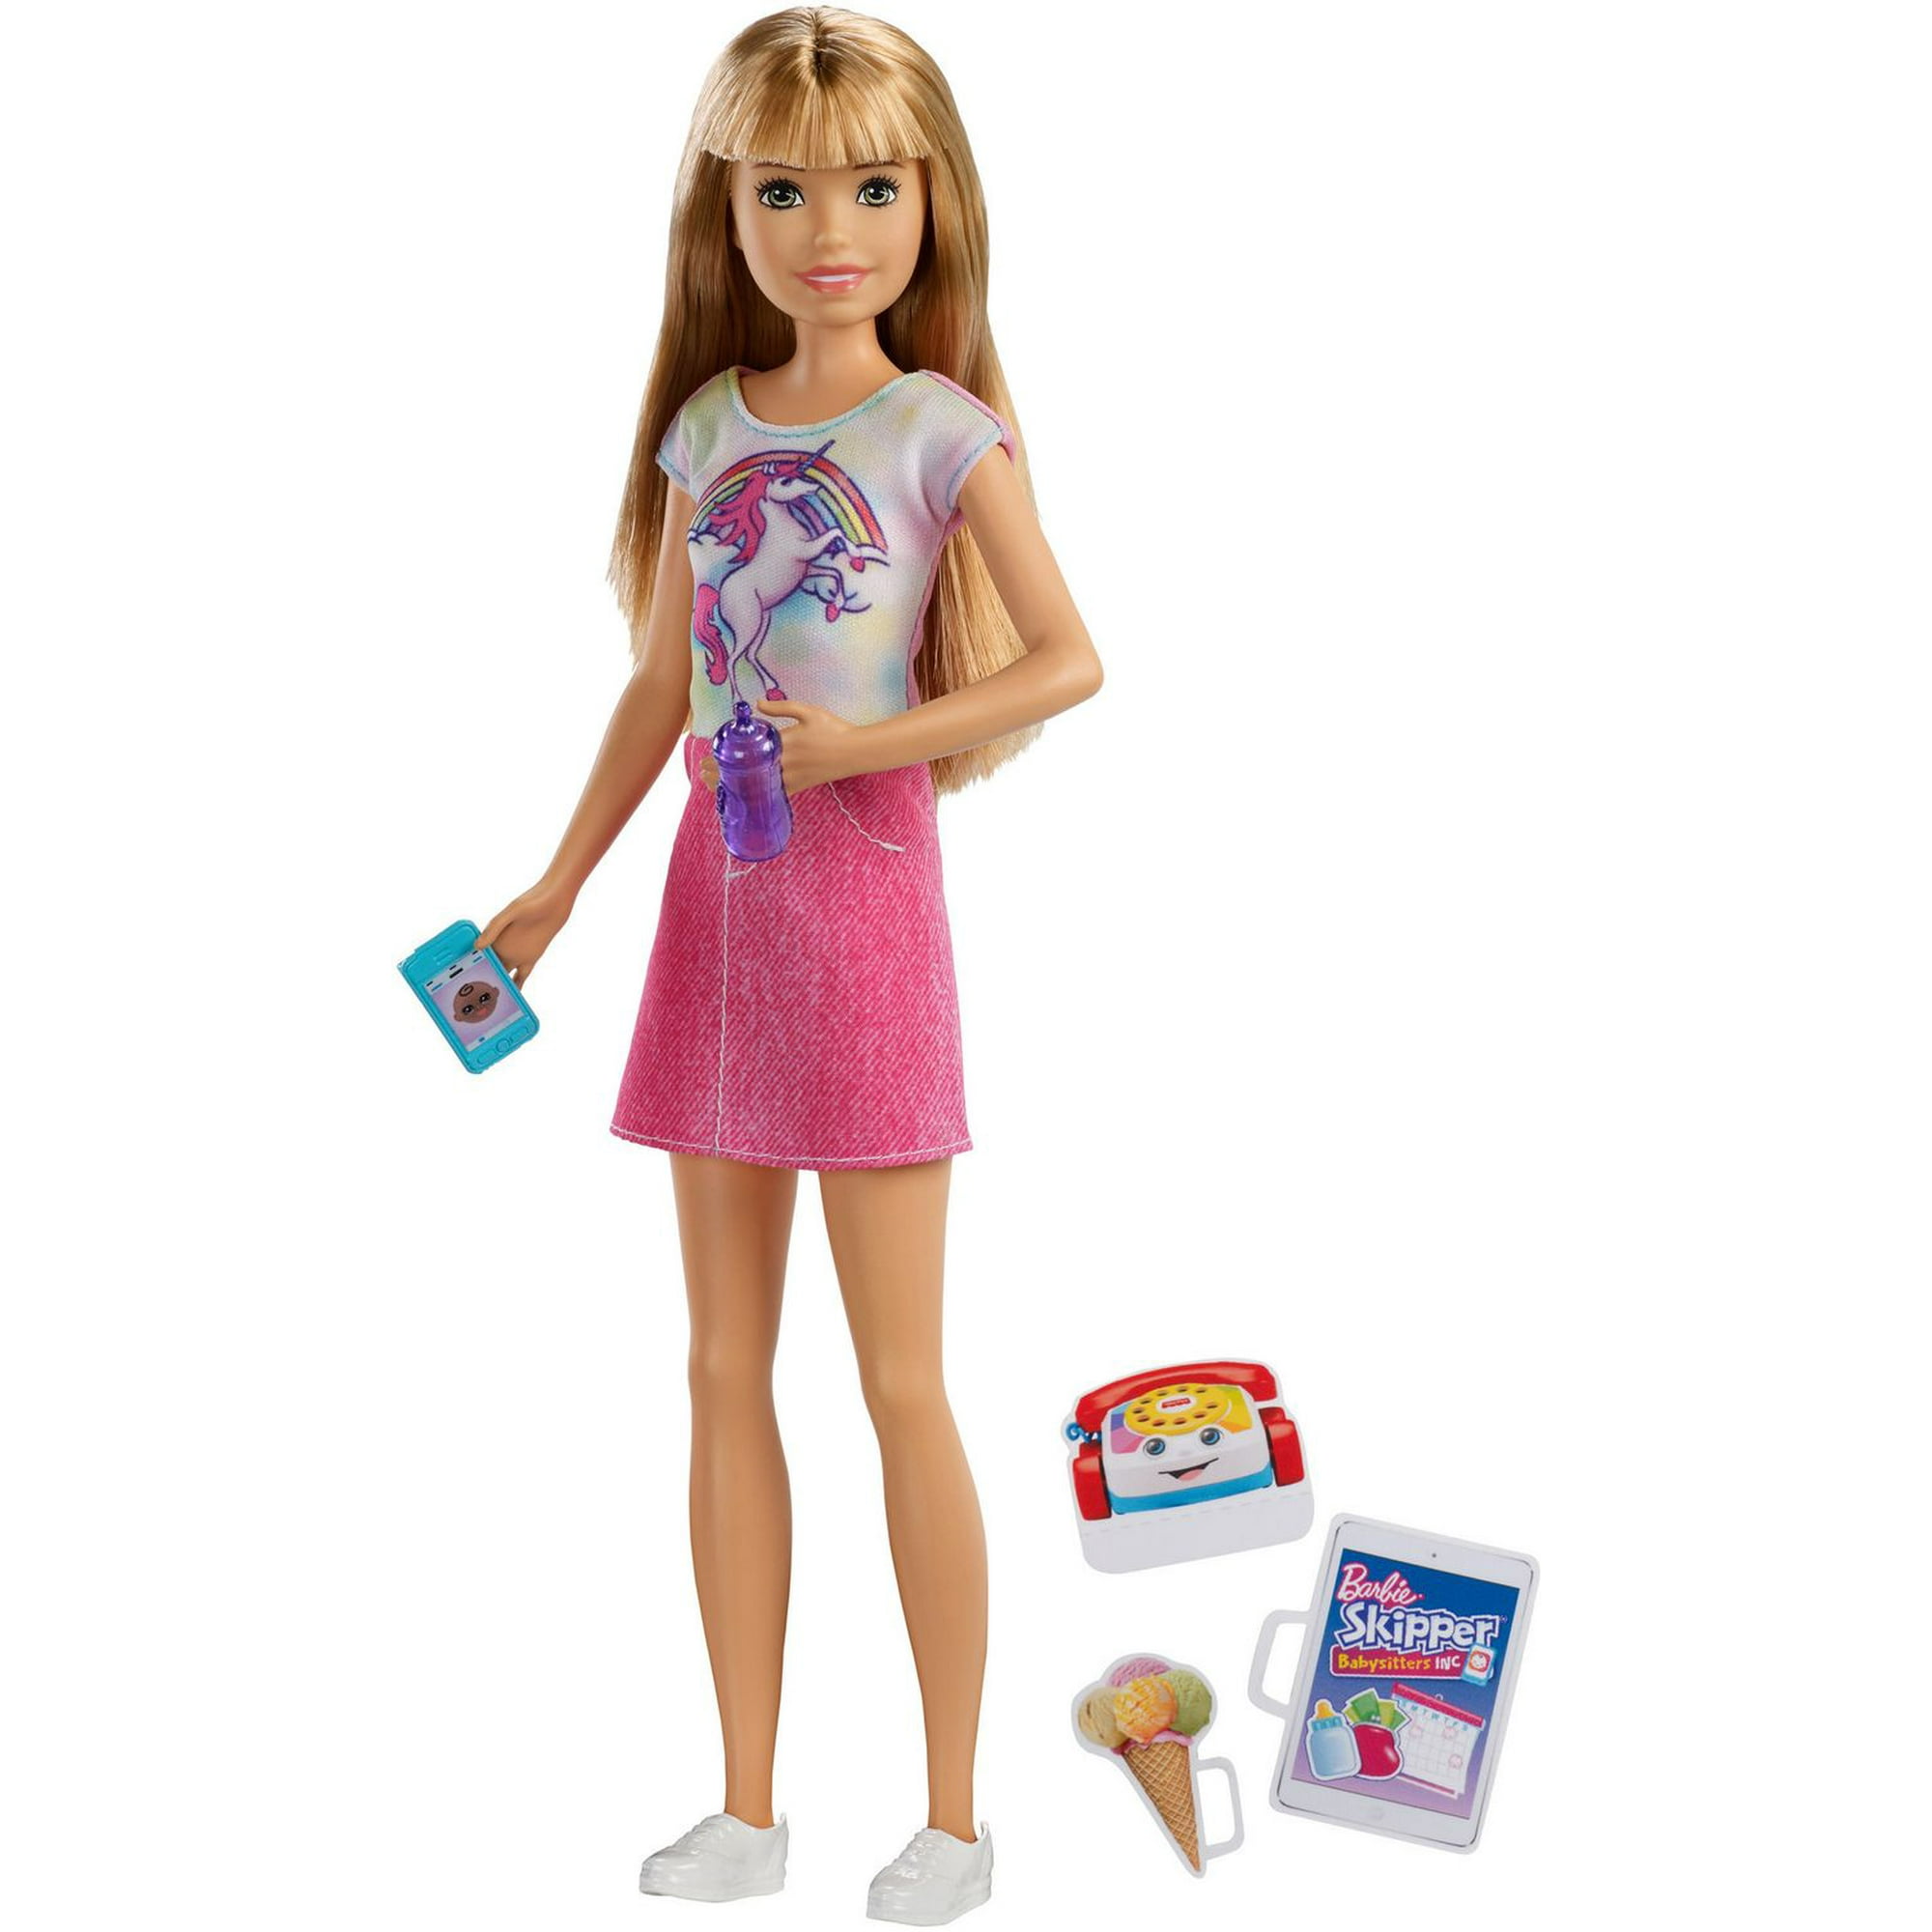 Barbie Skipper Babysitters Inc Doll & Accessories Set - Blonde